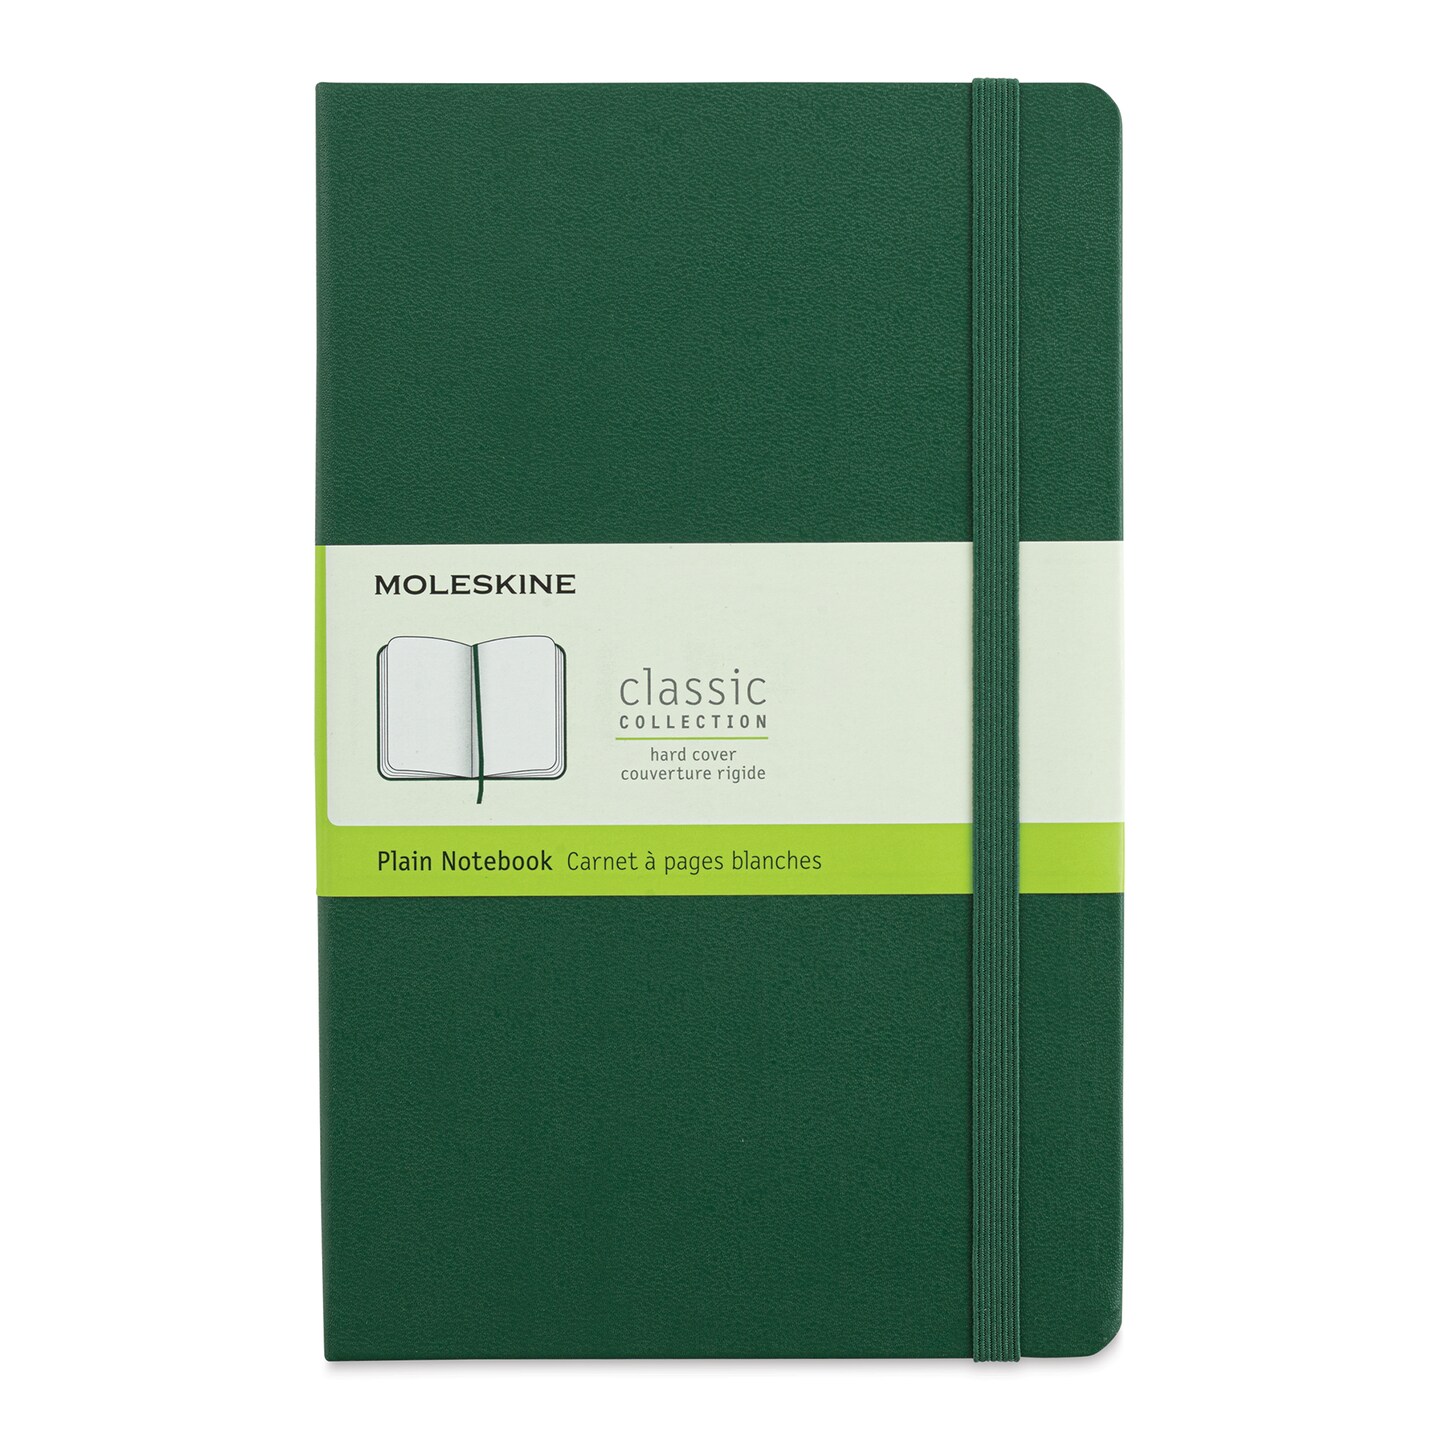 Moleskine Classic Hardcover Notebook - Myrtle Green, Blank, 8-1/4